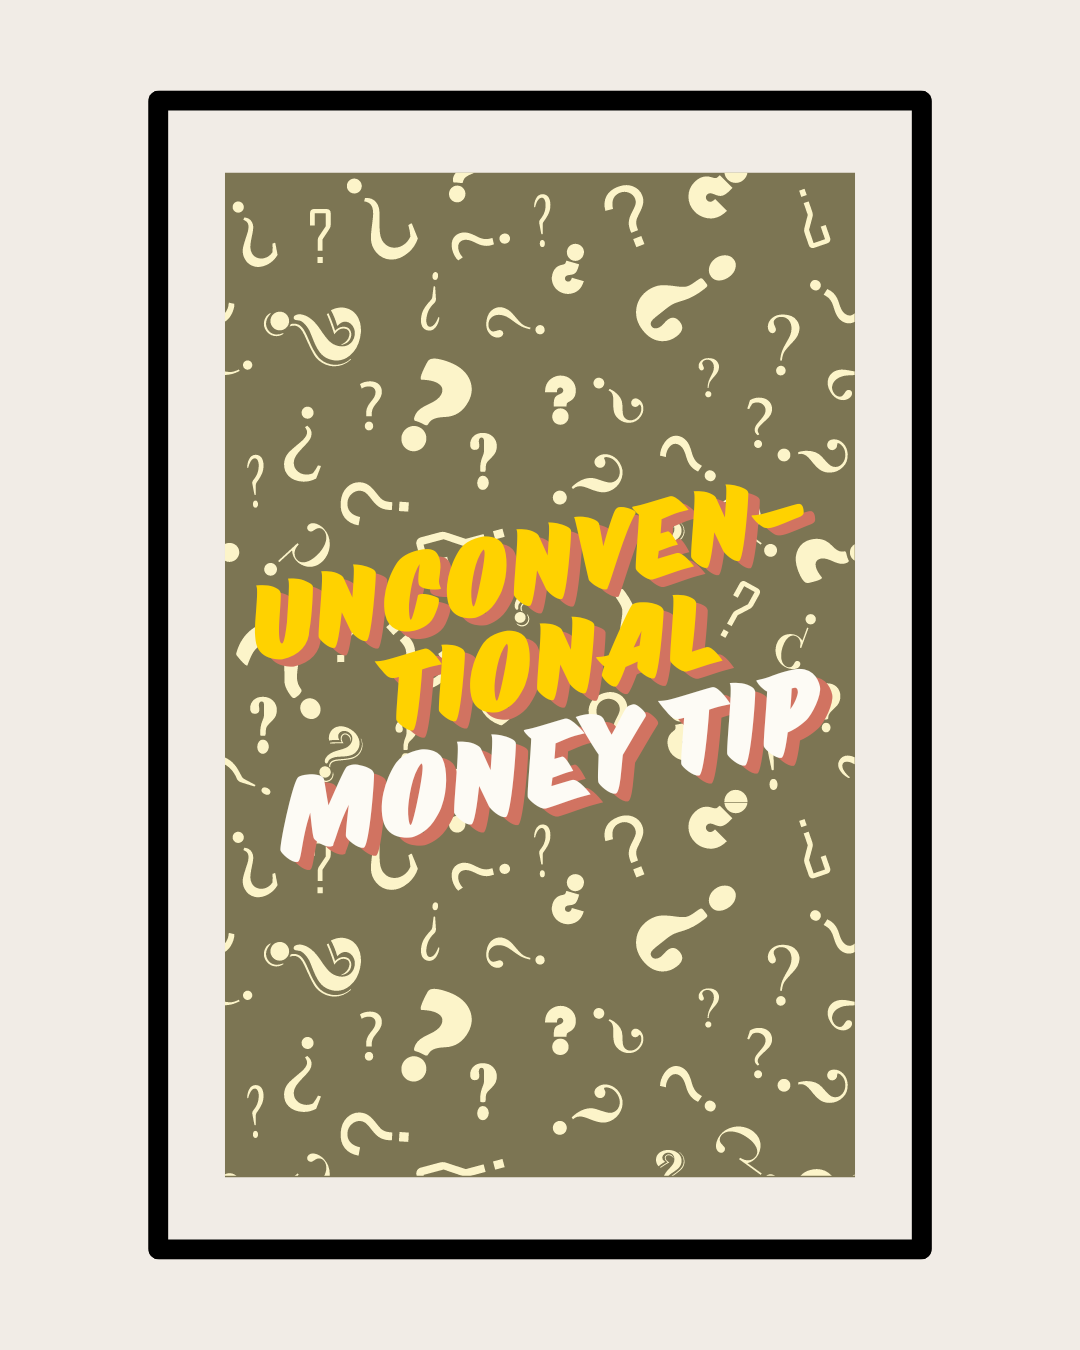 Unconventional Money Tip